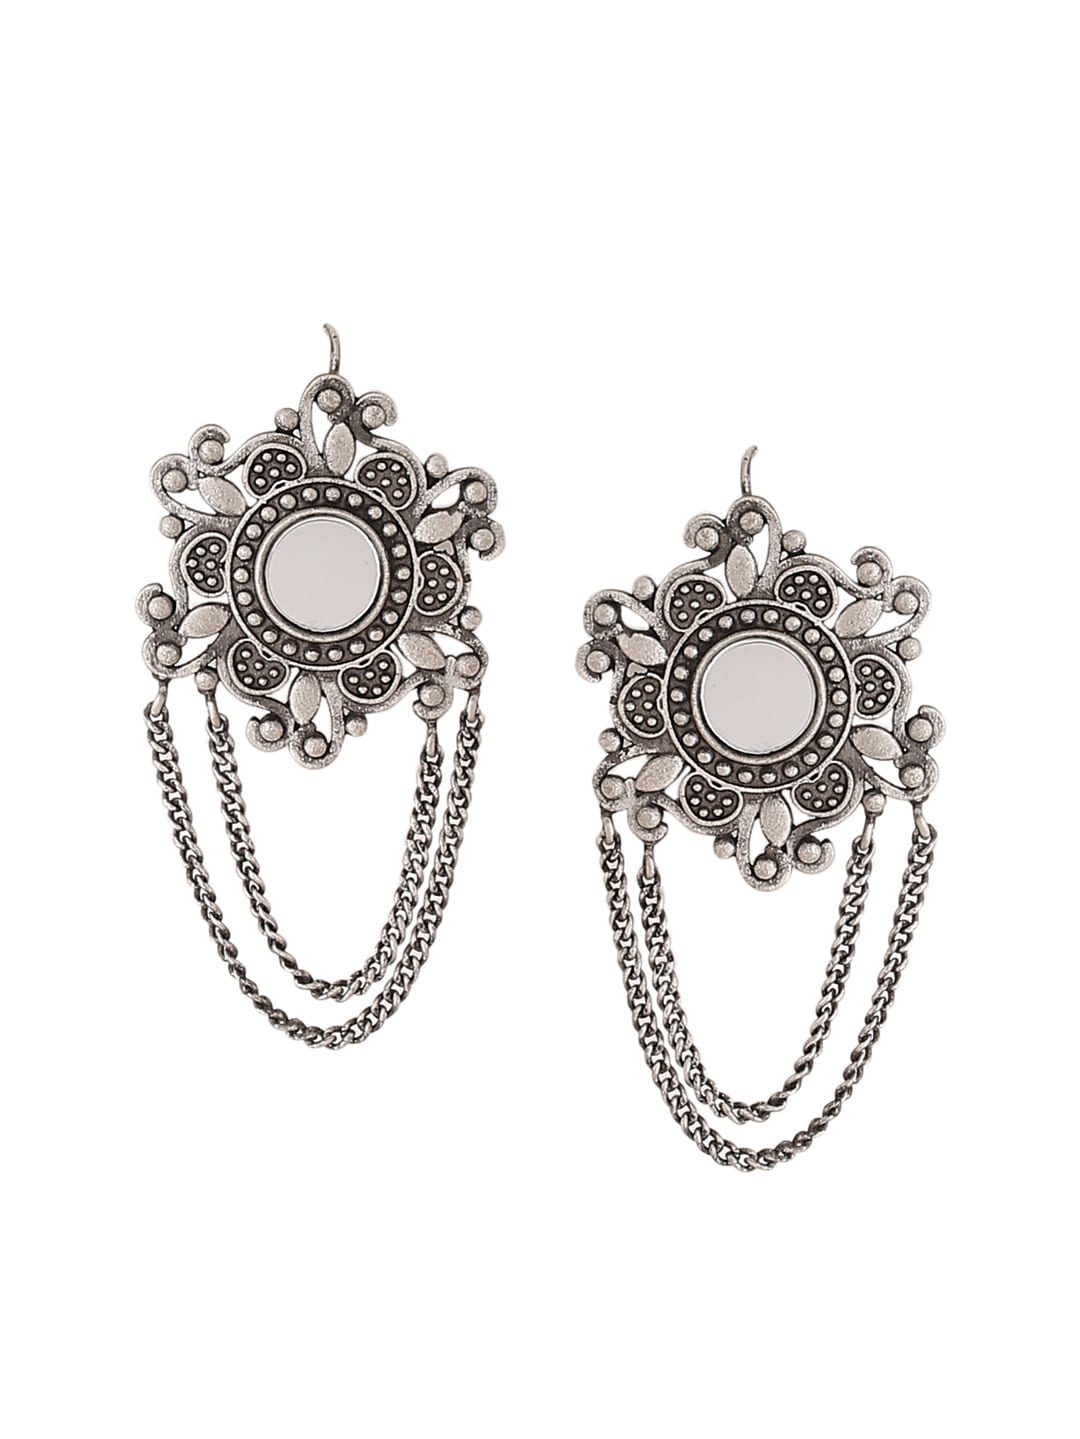 oxidised-floral-shape-mirror-earrings-viraasi